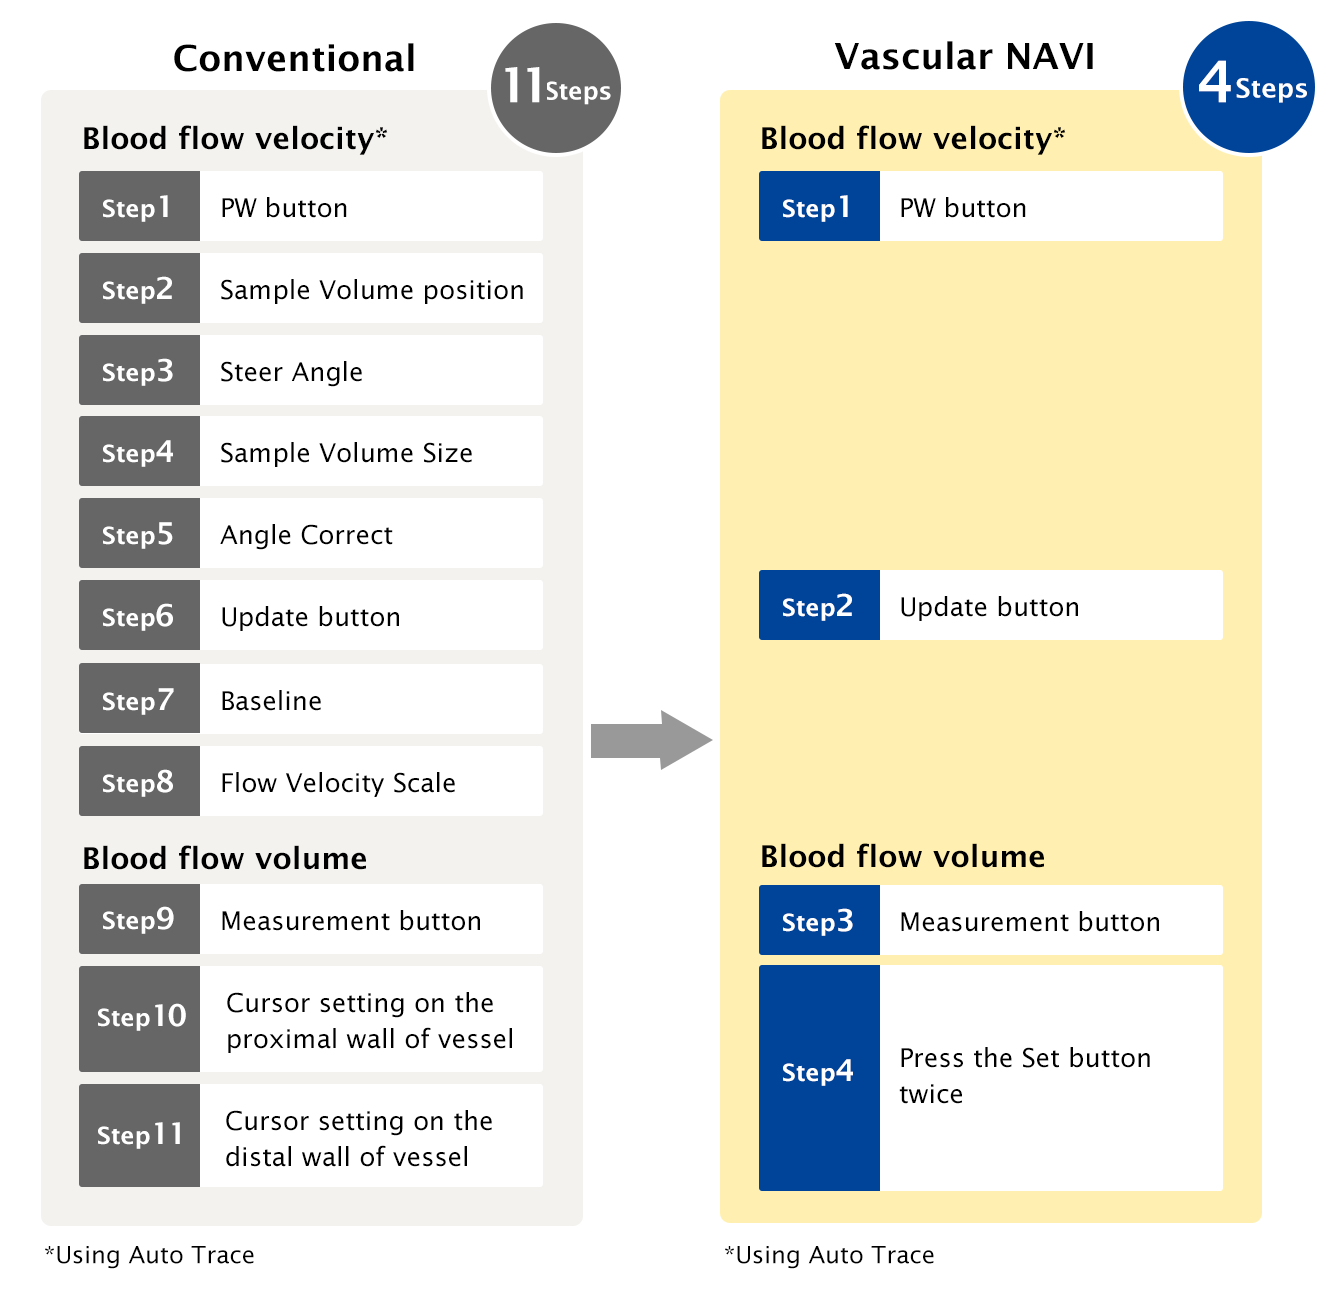 Vascular NAVI achieves Easy to use vascular ultrasound